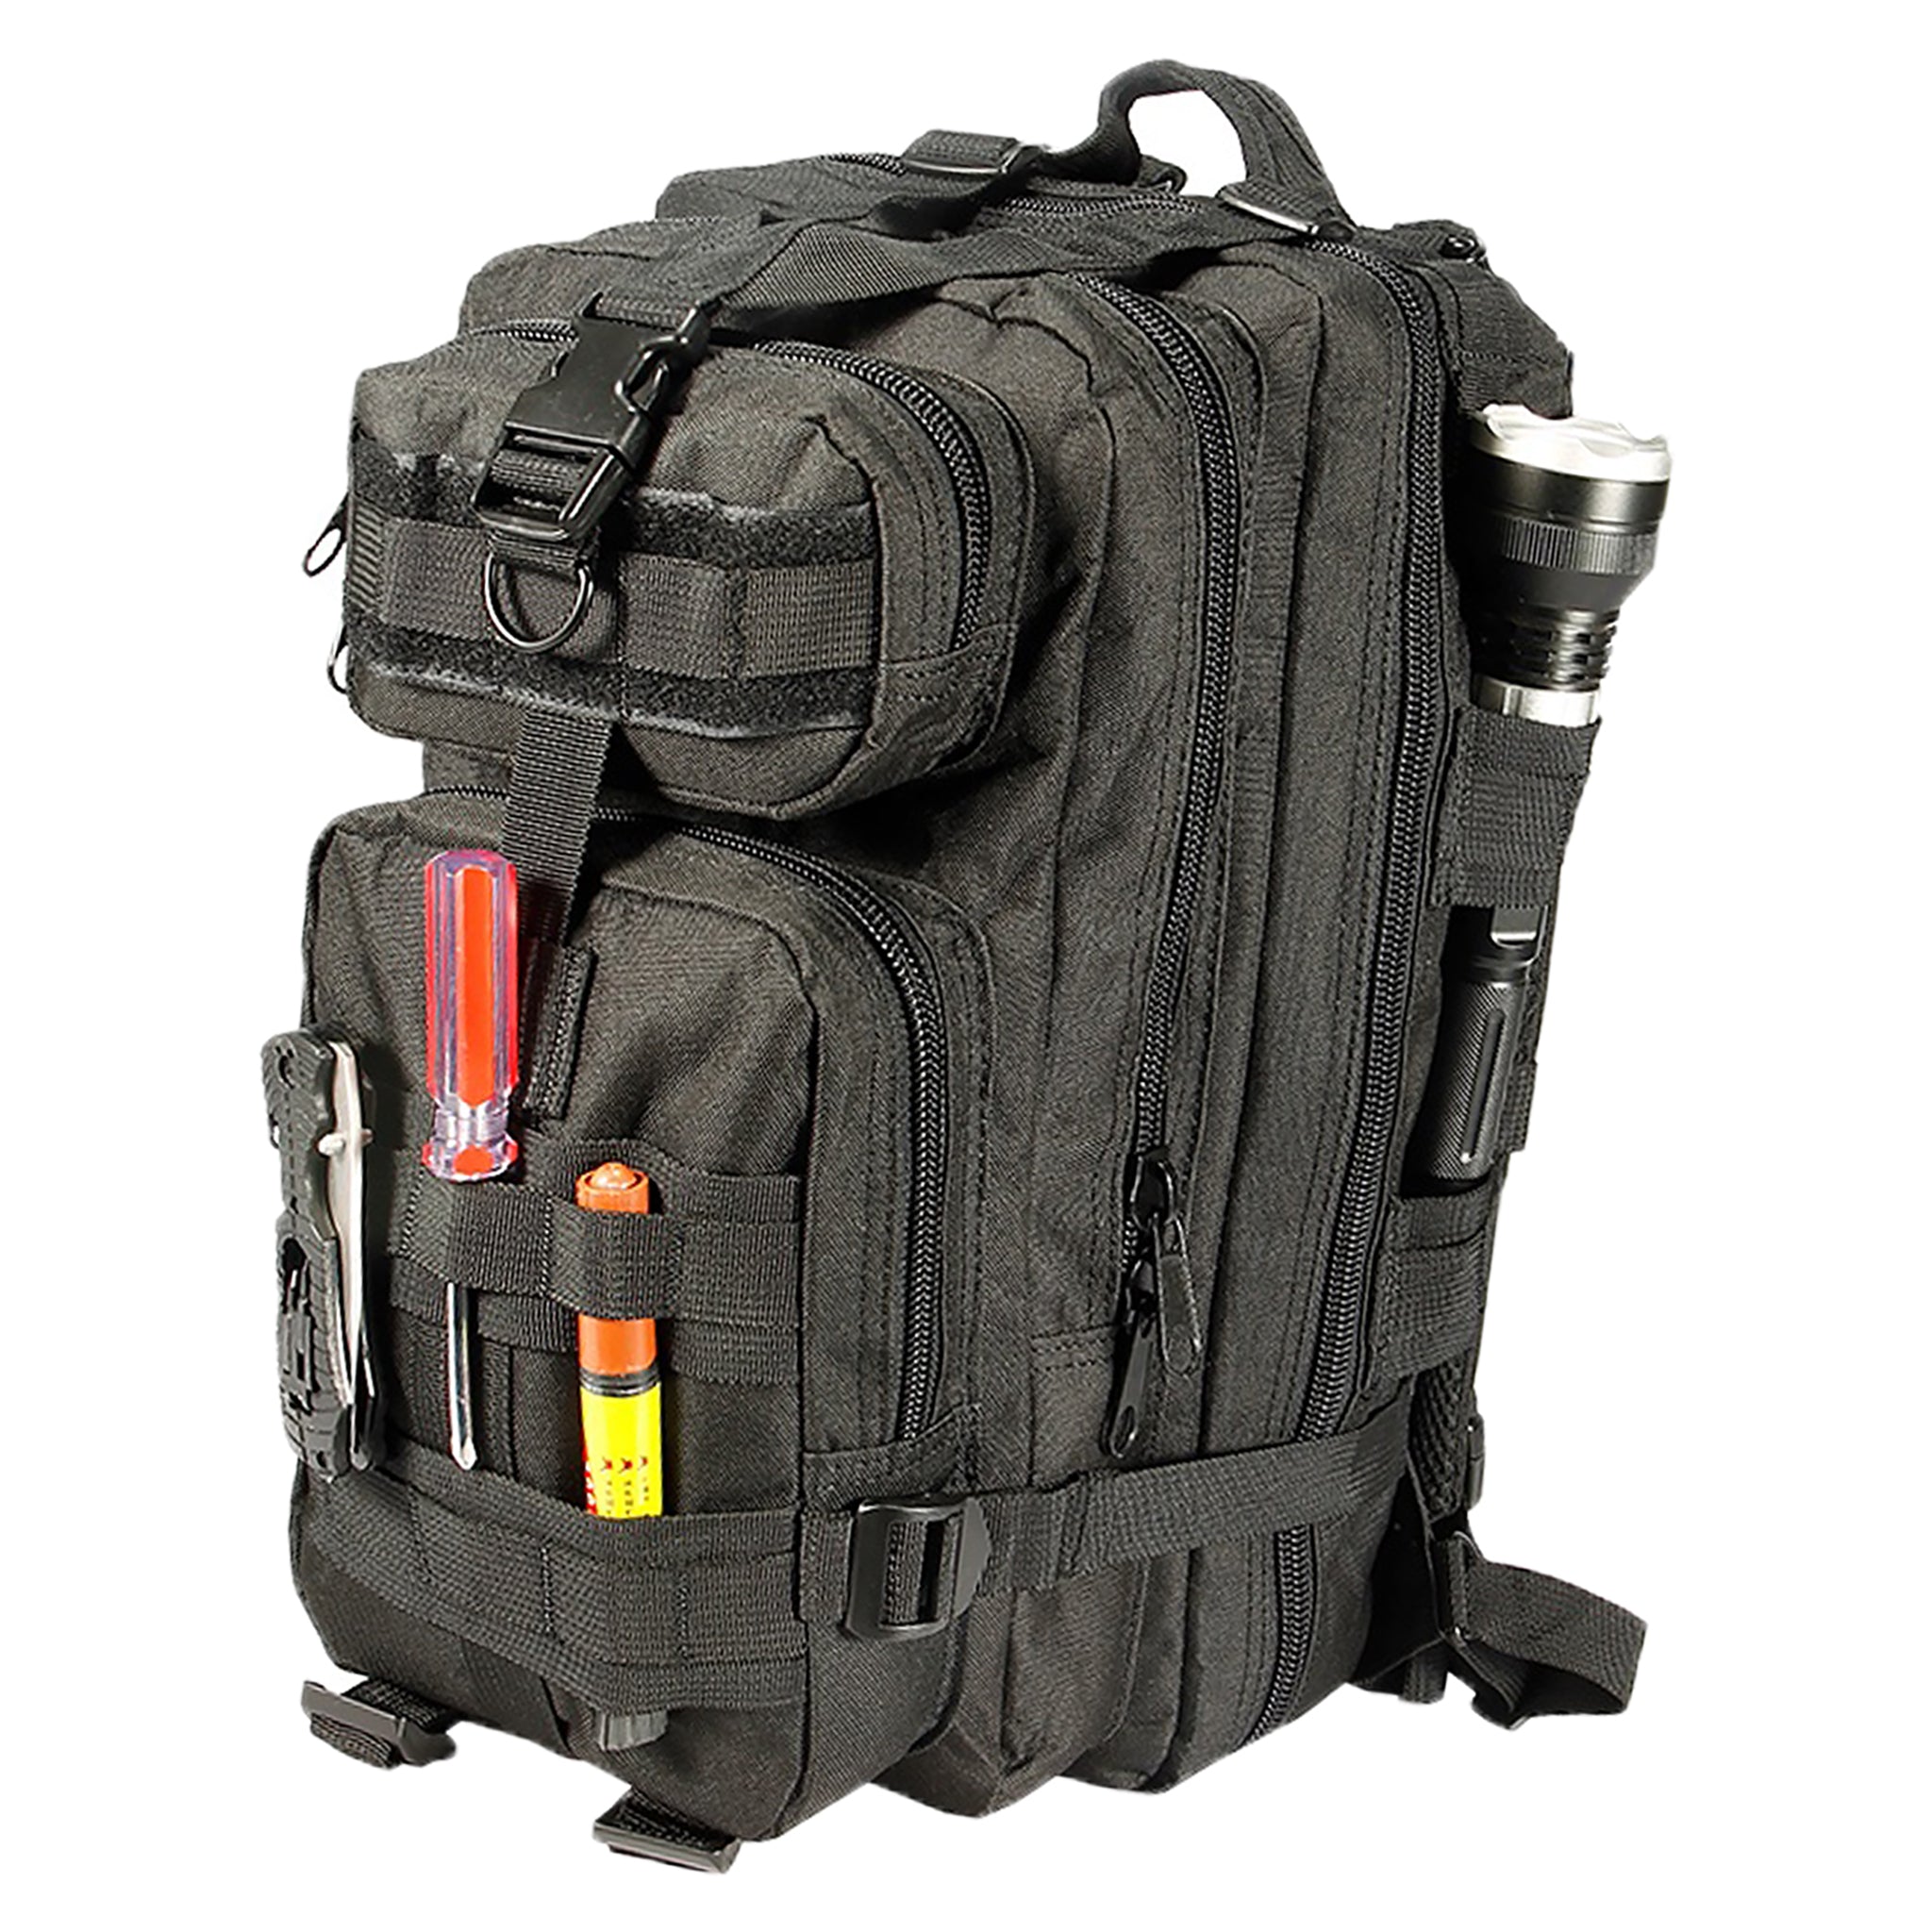 Senna - Waterproof backpack | Tactical Backpack | Camping backpack